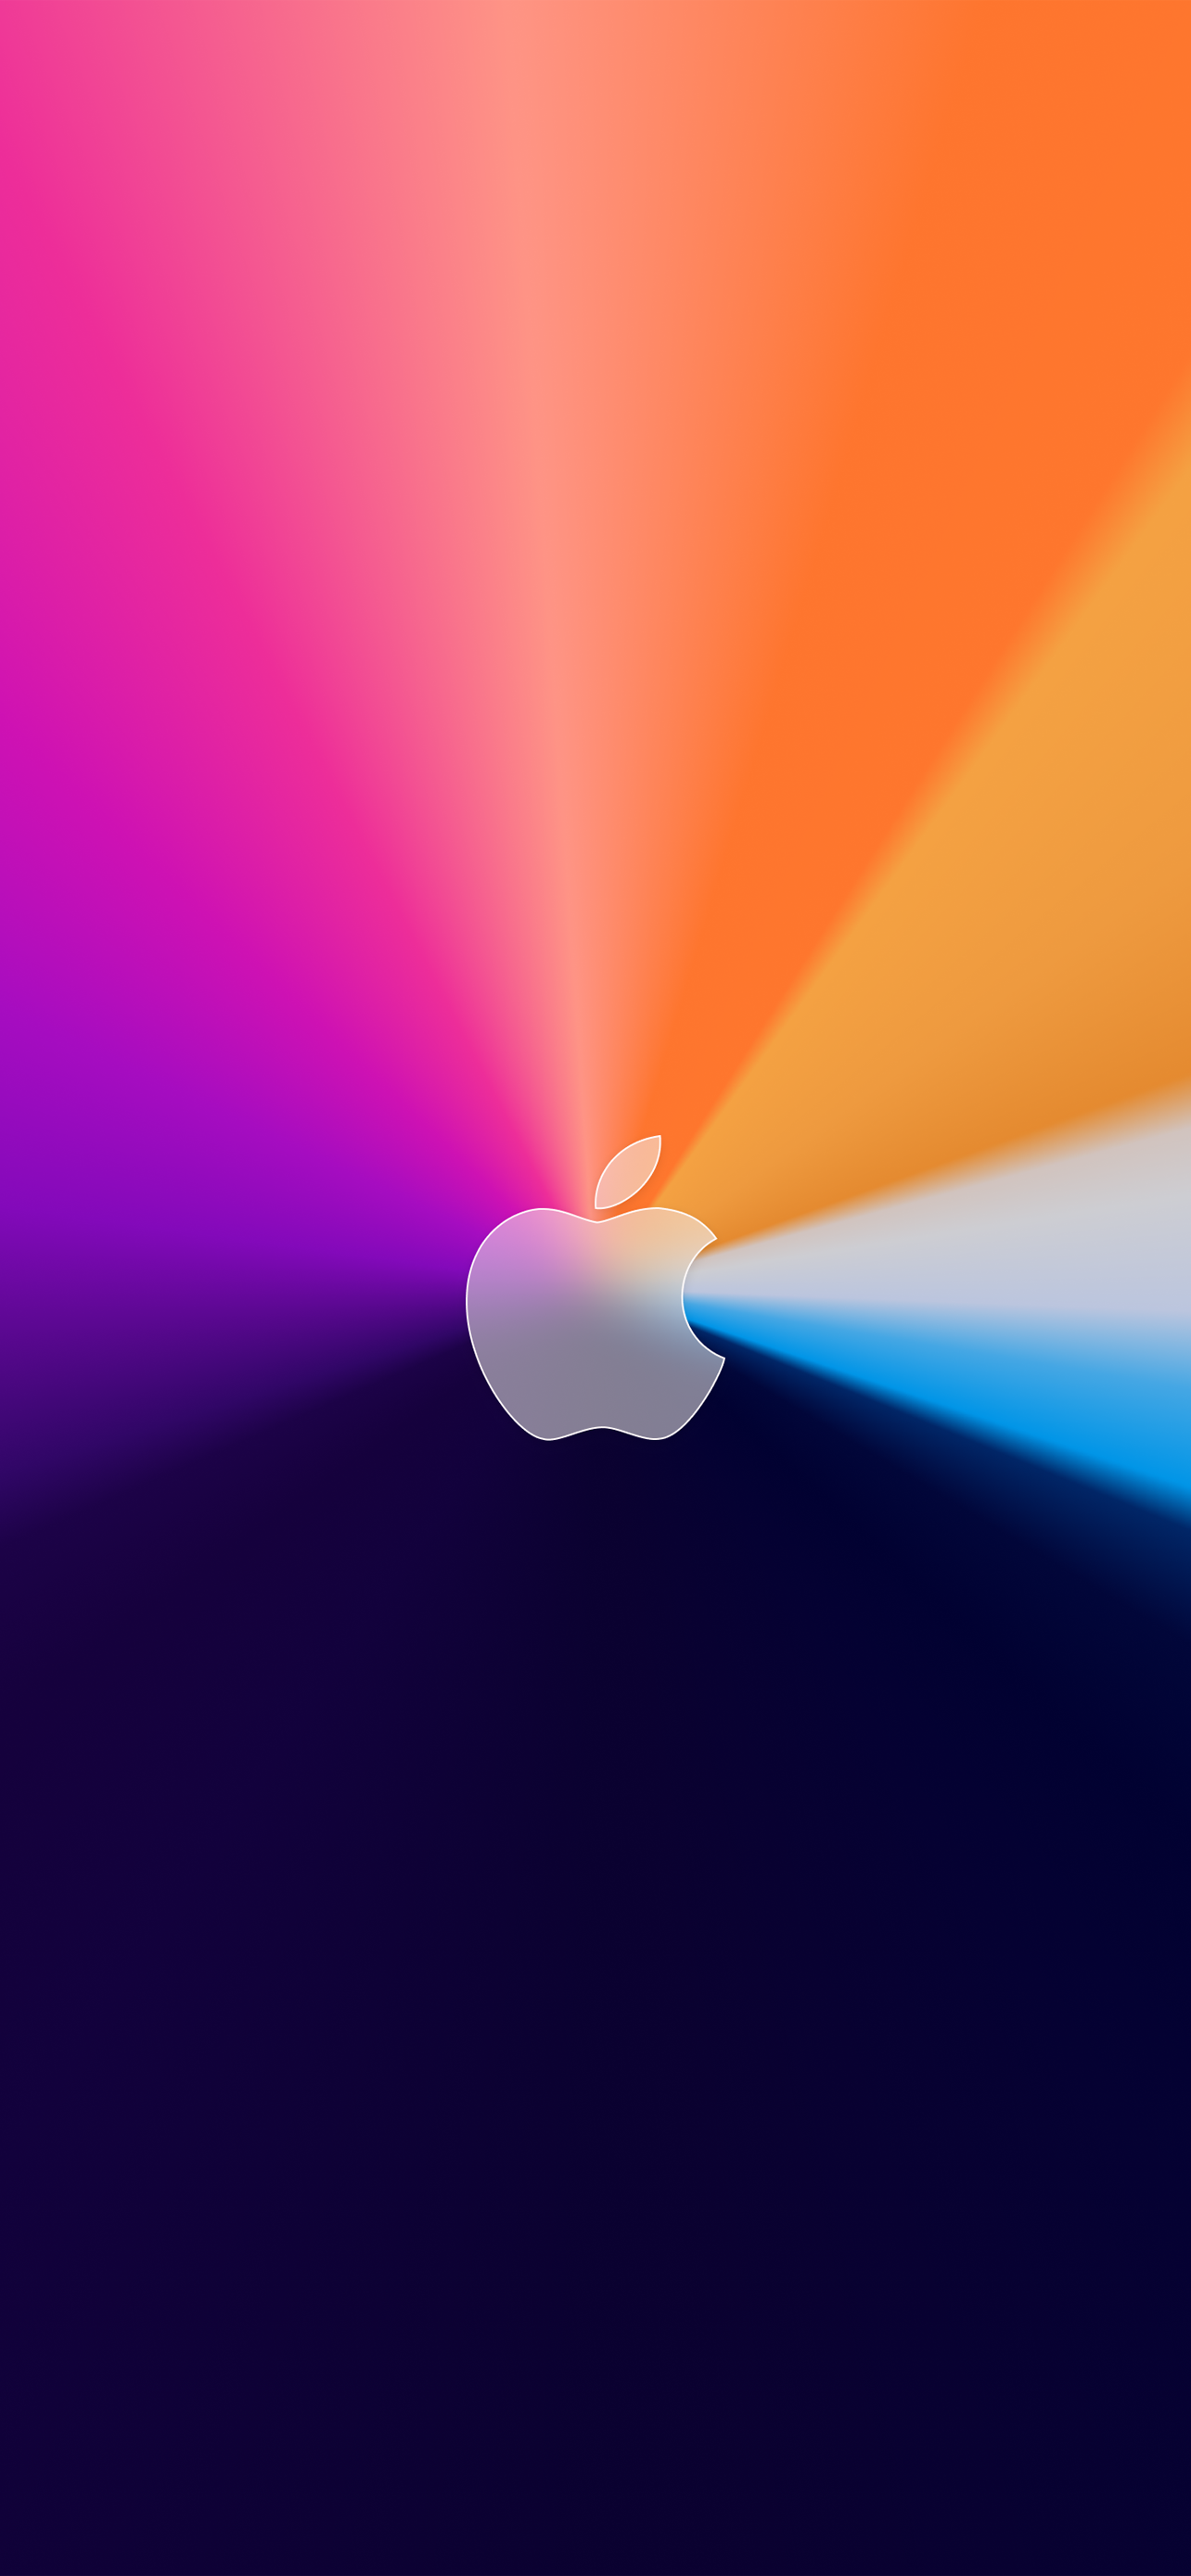 iPhone 12 Pro Max Wallpaper. Apple logo wallpaper iphone, Apple wallpaper, Apple wallpaper iphone